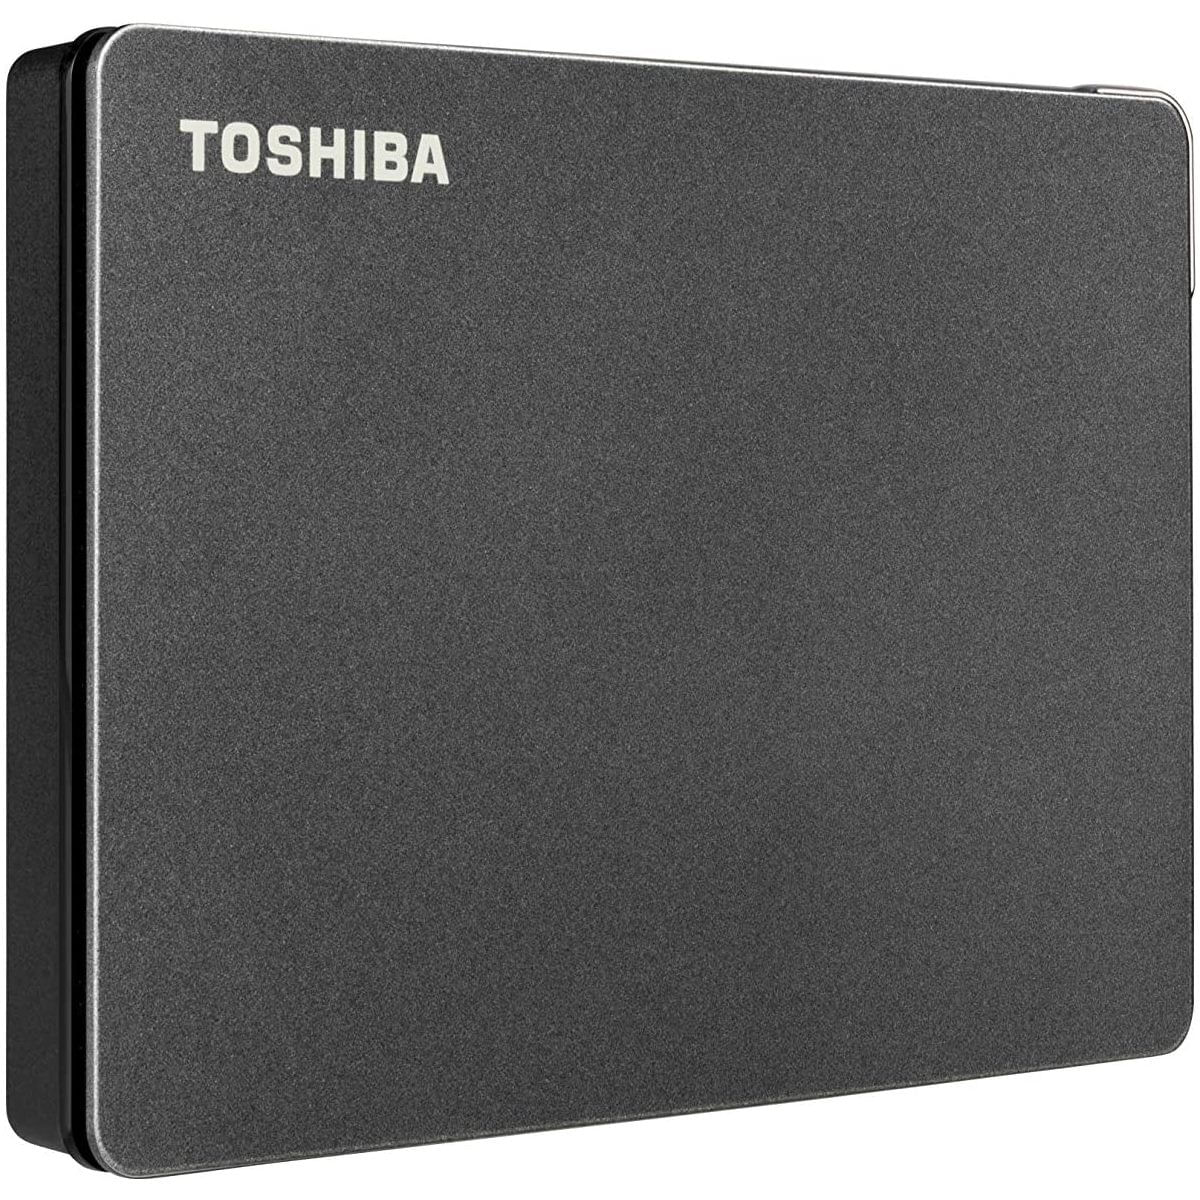 Disco Externo Toshiba 2TB Canvio Gaming USB 3.0 - HDTX120XK3AA